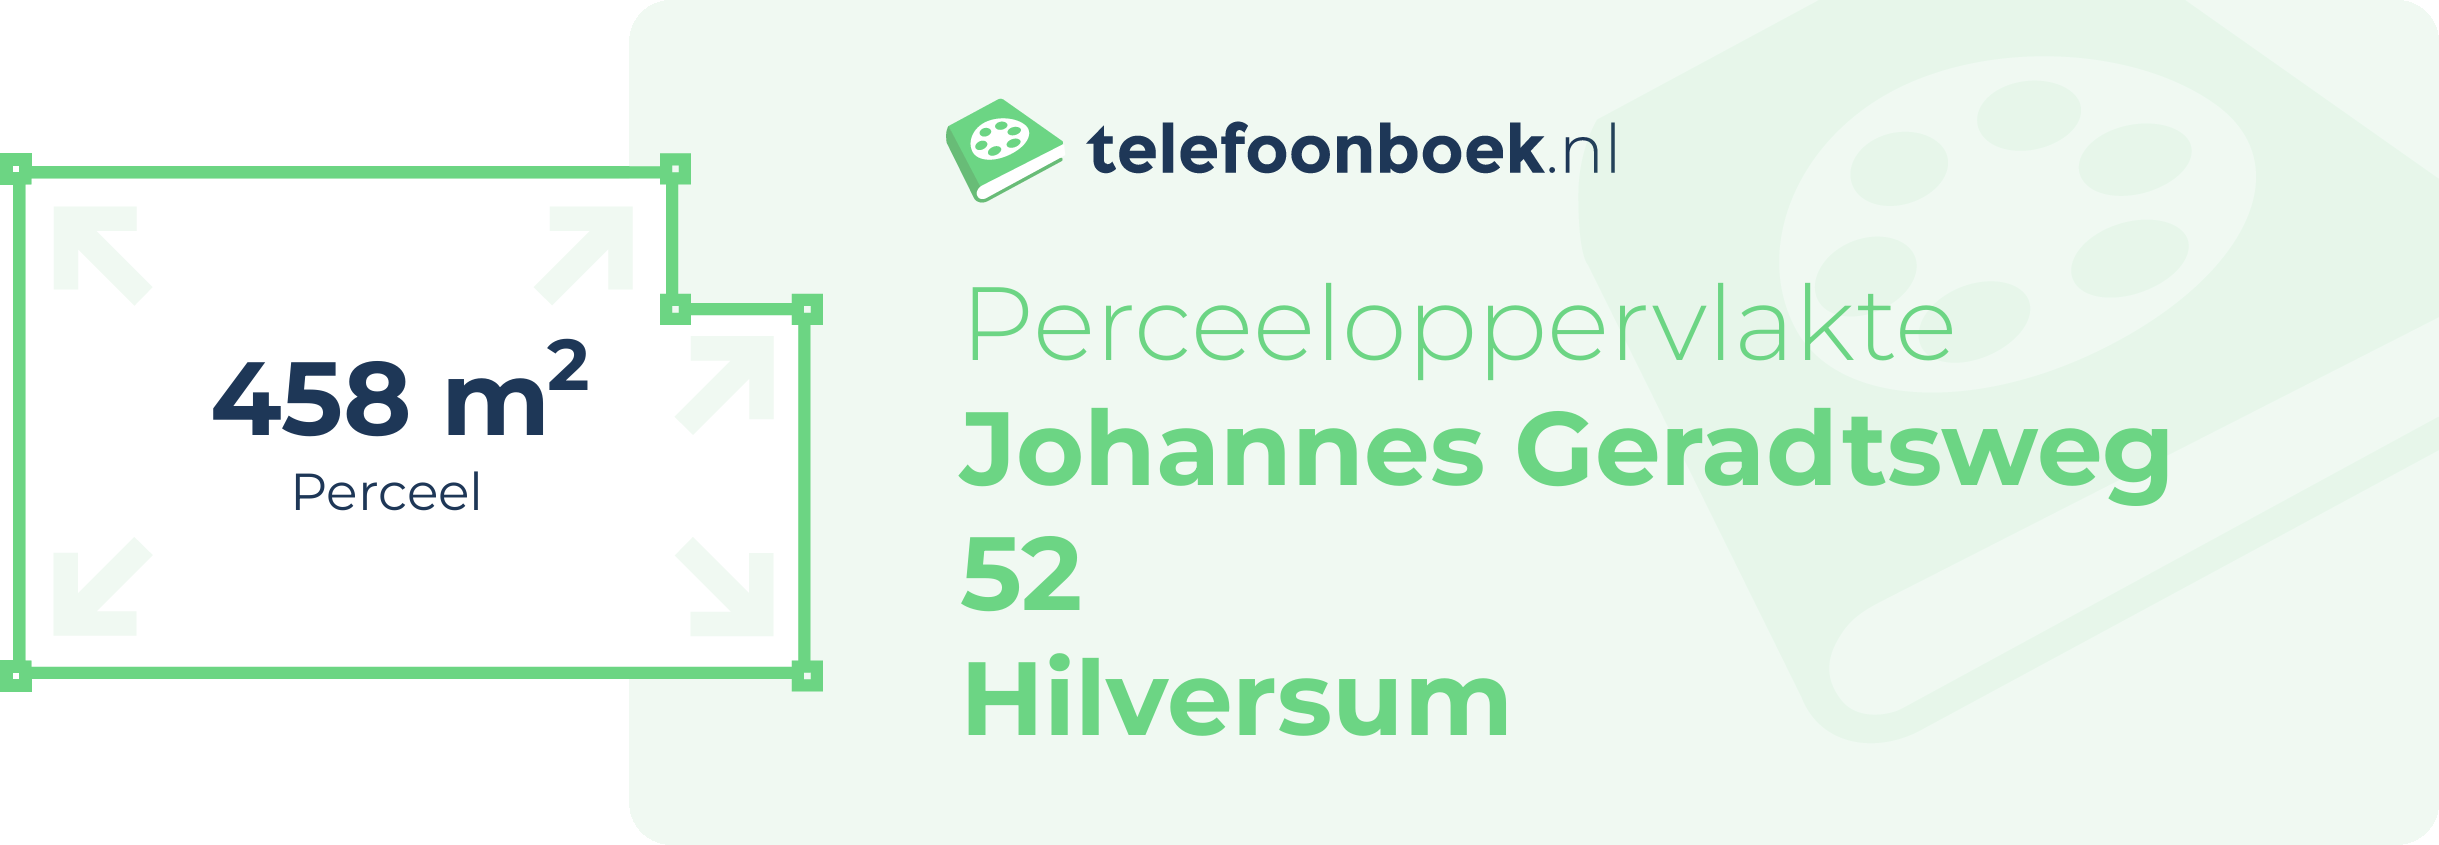 Perceeloppervlakte Johannes Geradtsweg 52 Hilversum